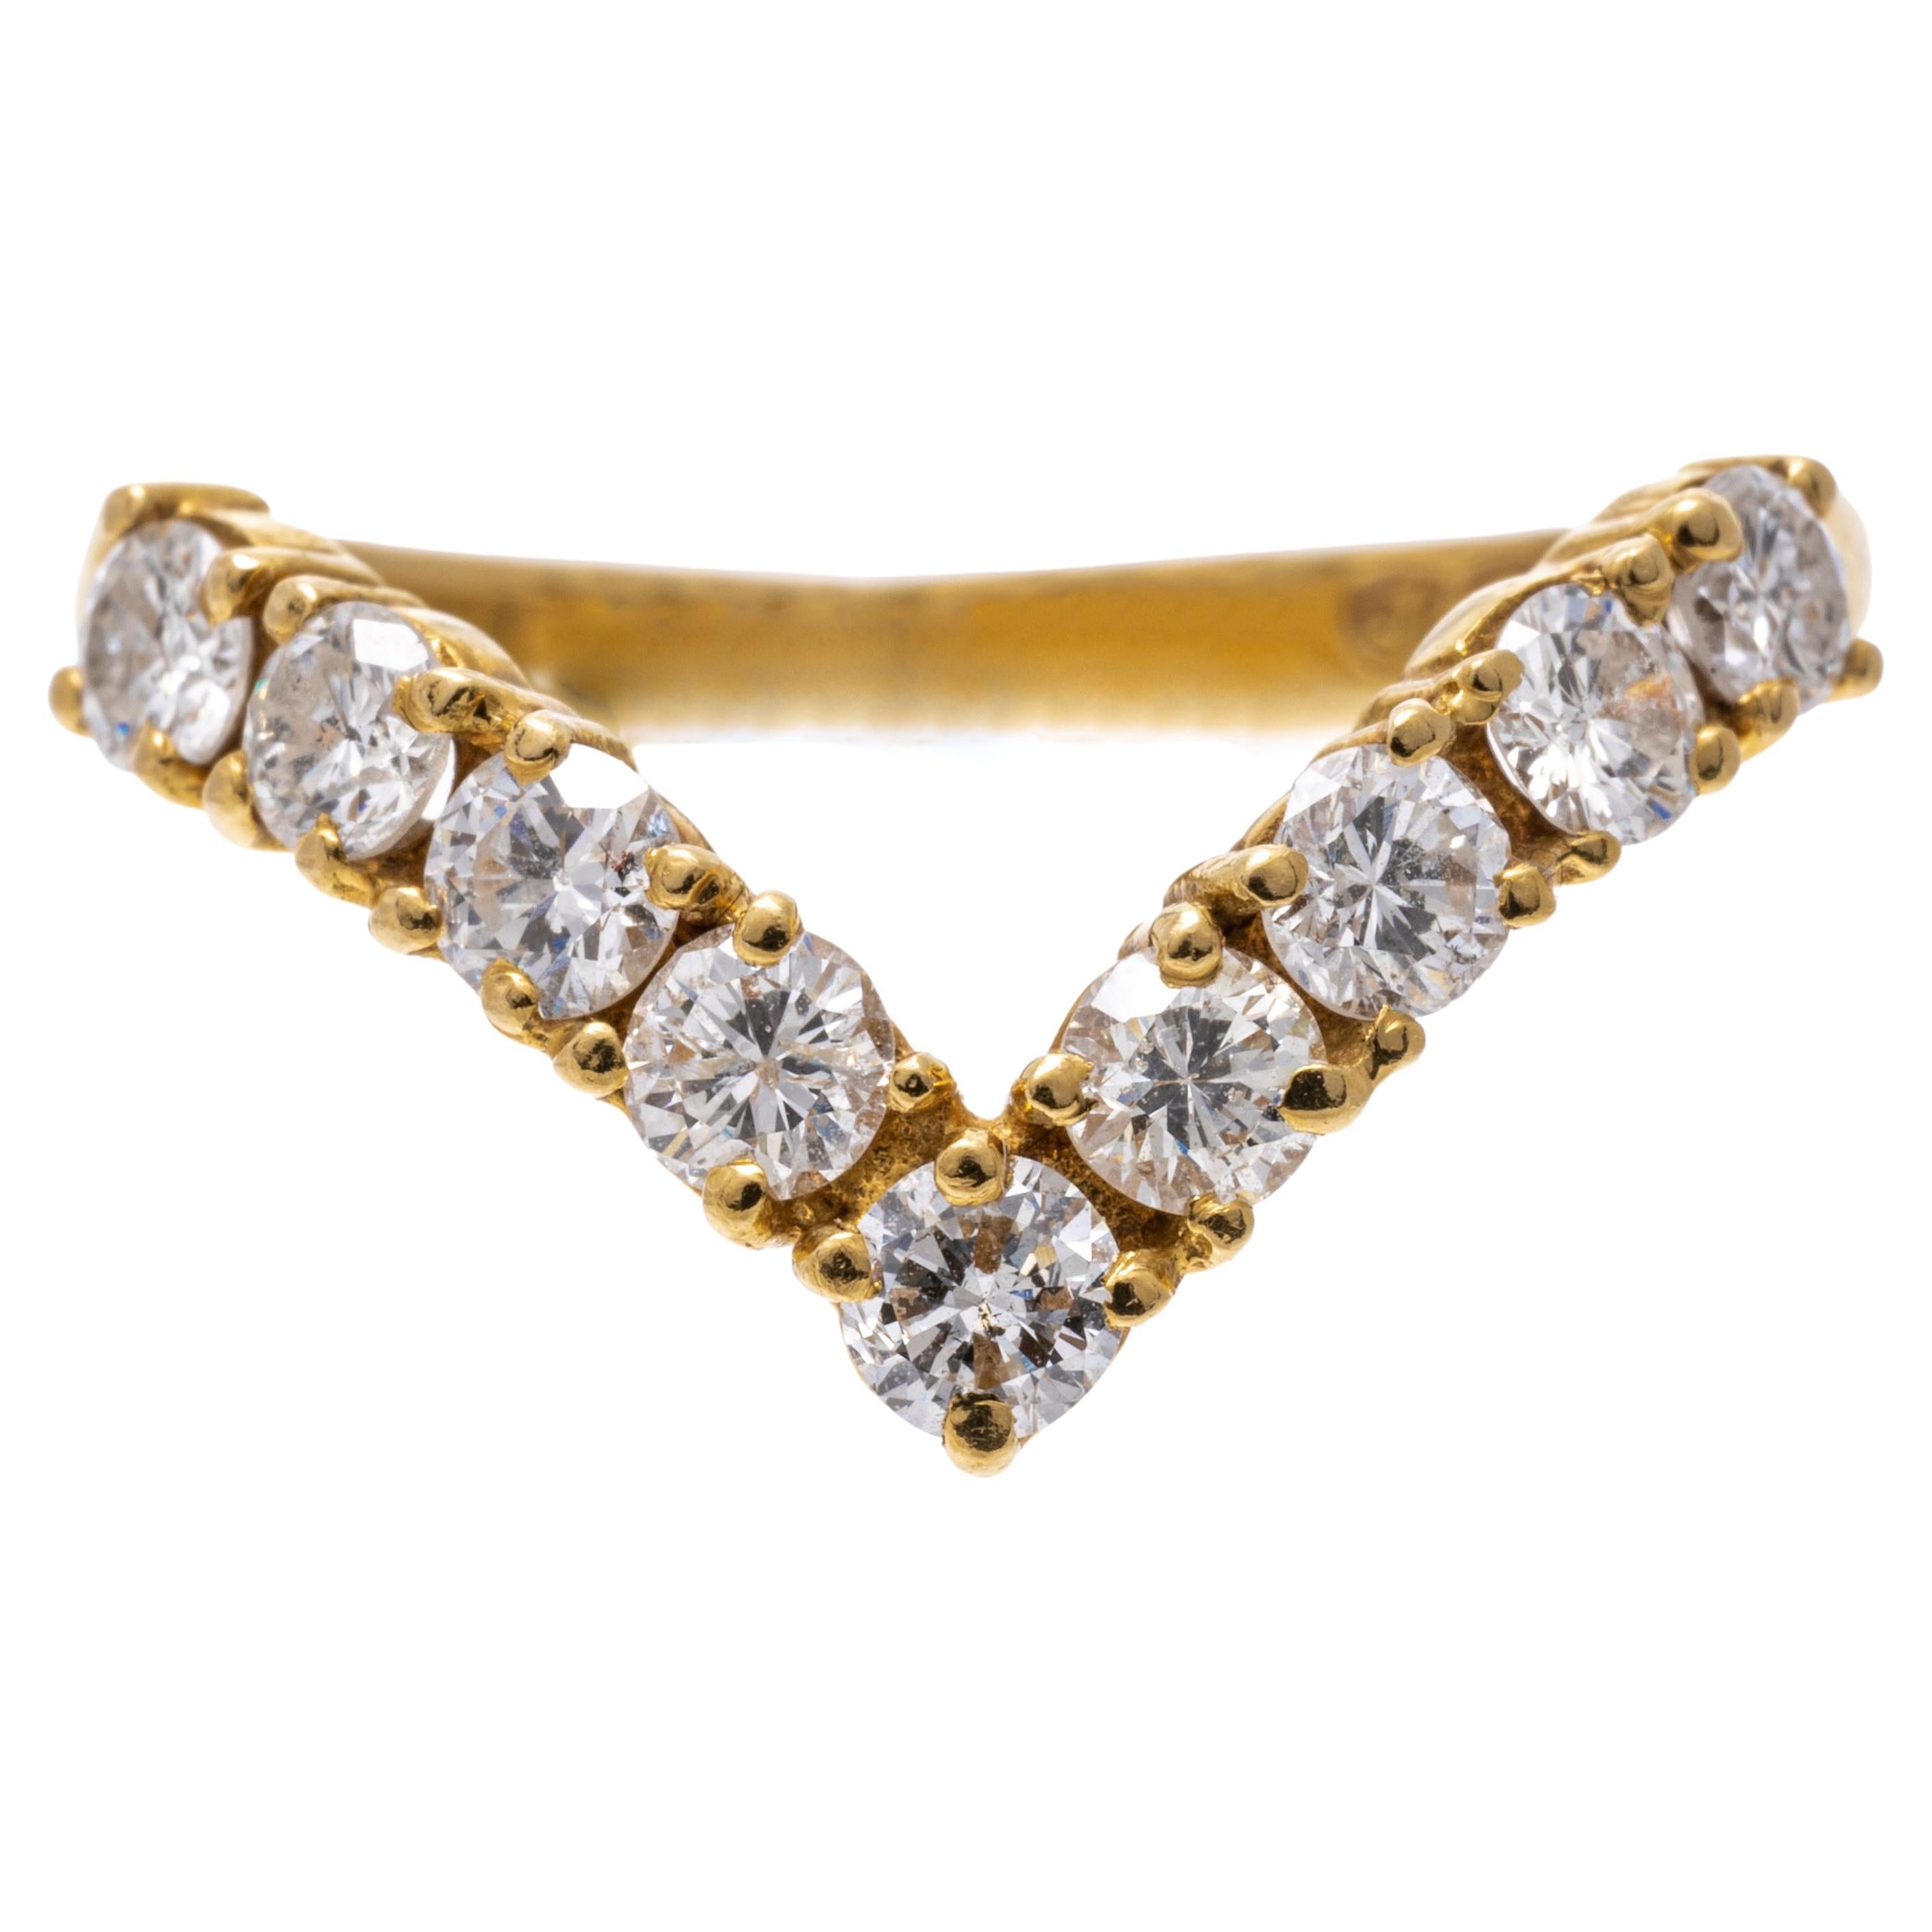 18k Yellow Gold Round Brilliant Diamond "v" Band Ring